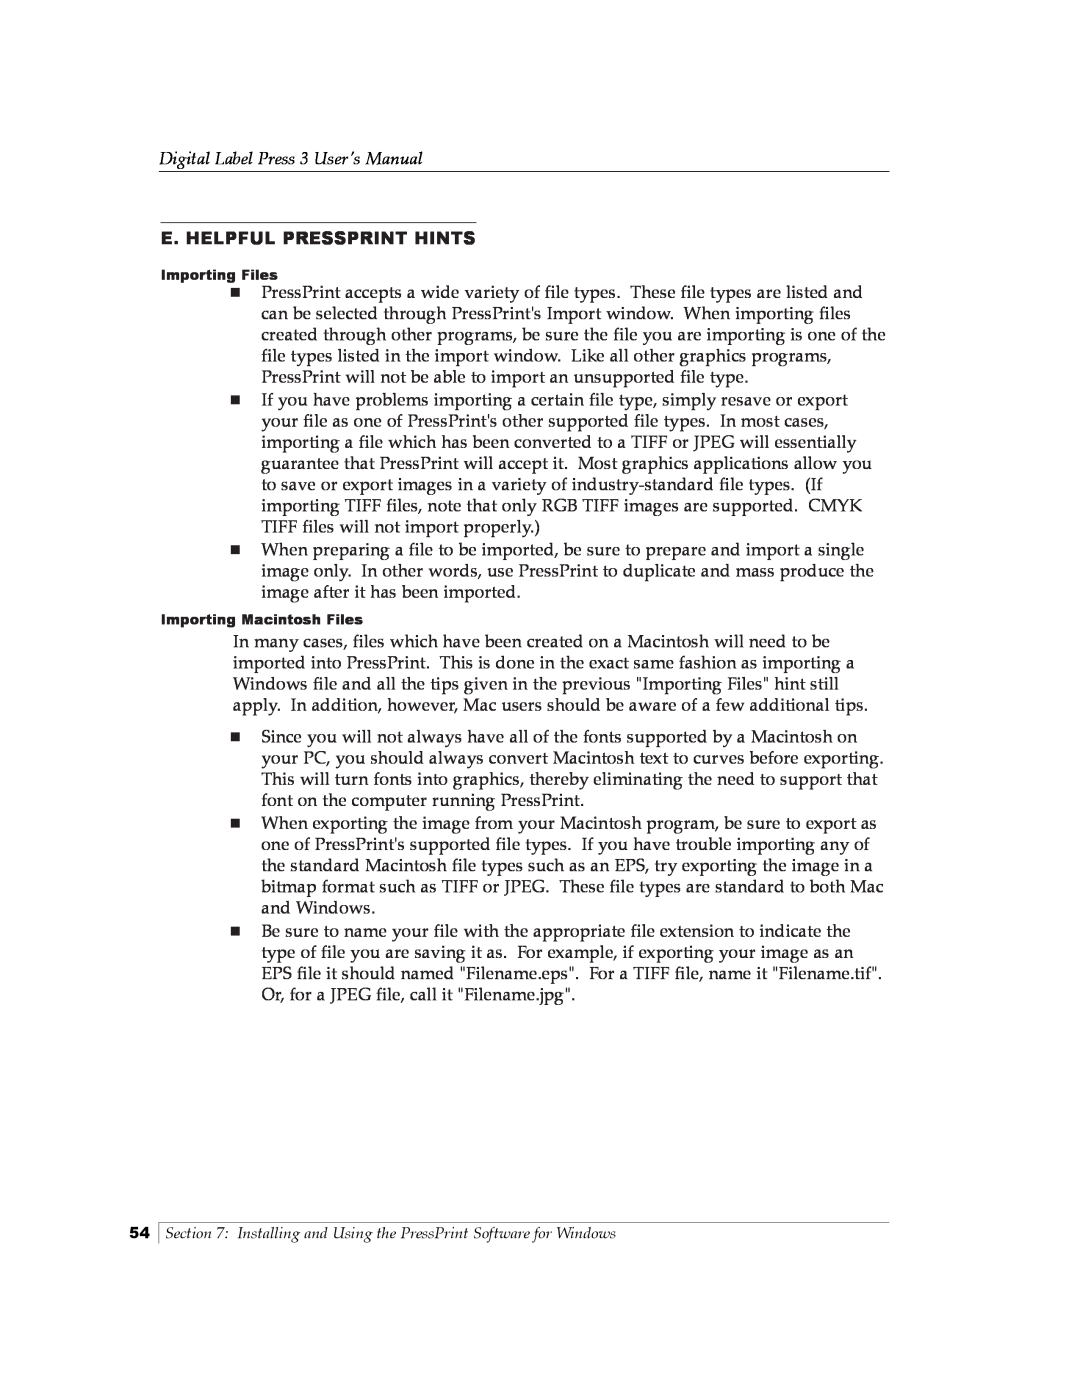 Primera Technology 510212 manual E. Helpful Pressprint Hints, Digital Label Press 3 User’s Manual, Importing Files 